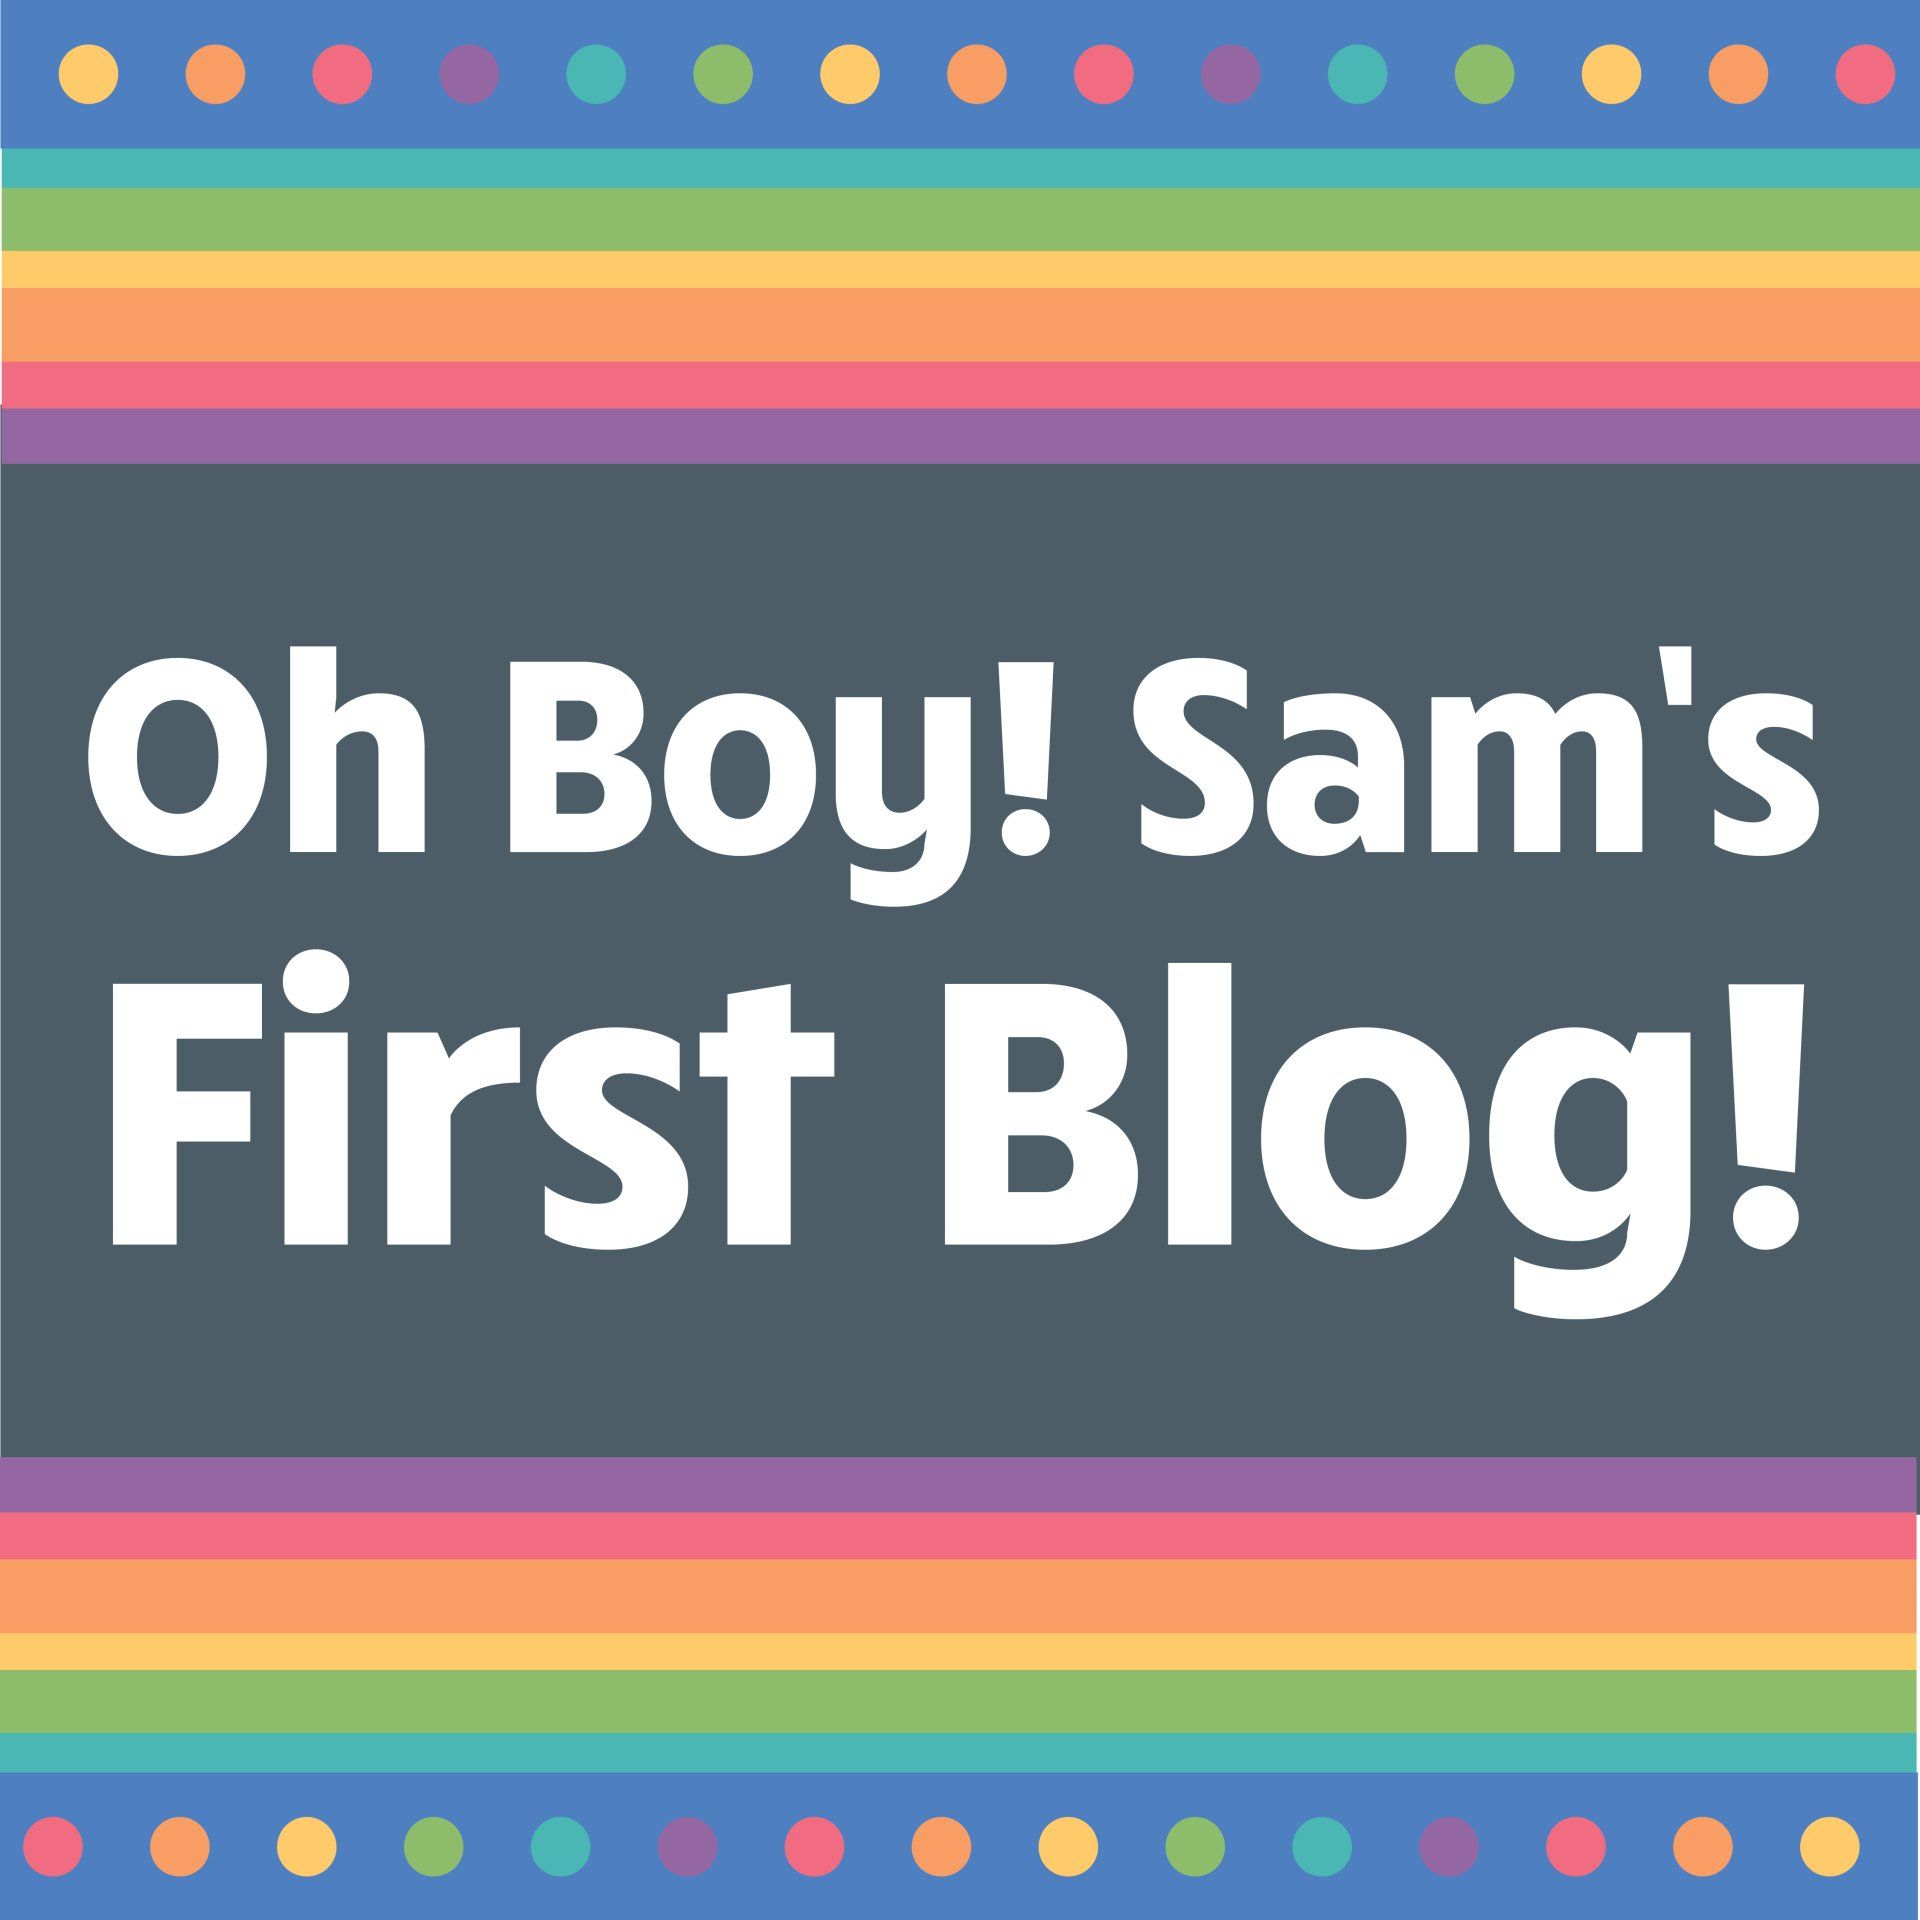 Oh Boy! Sam's First Blog!